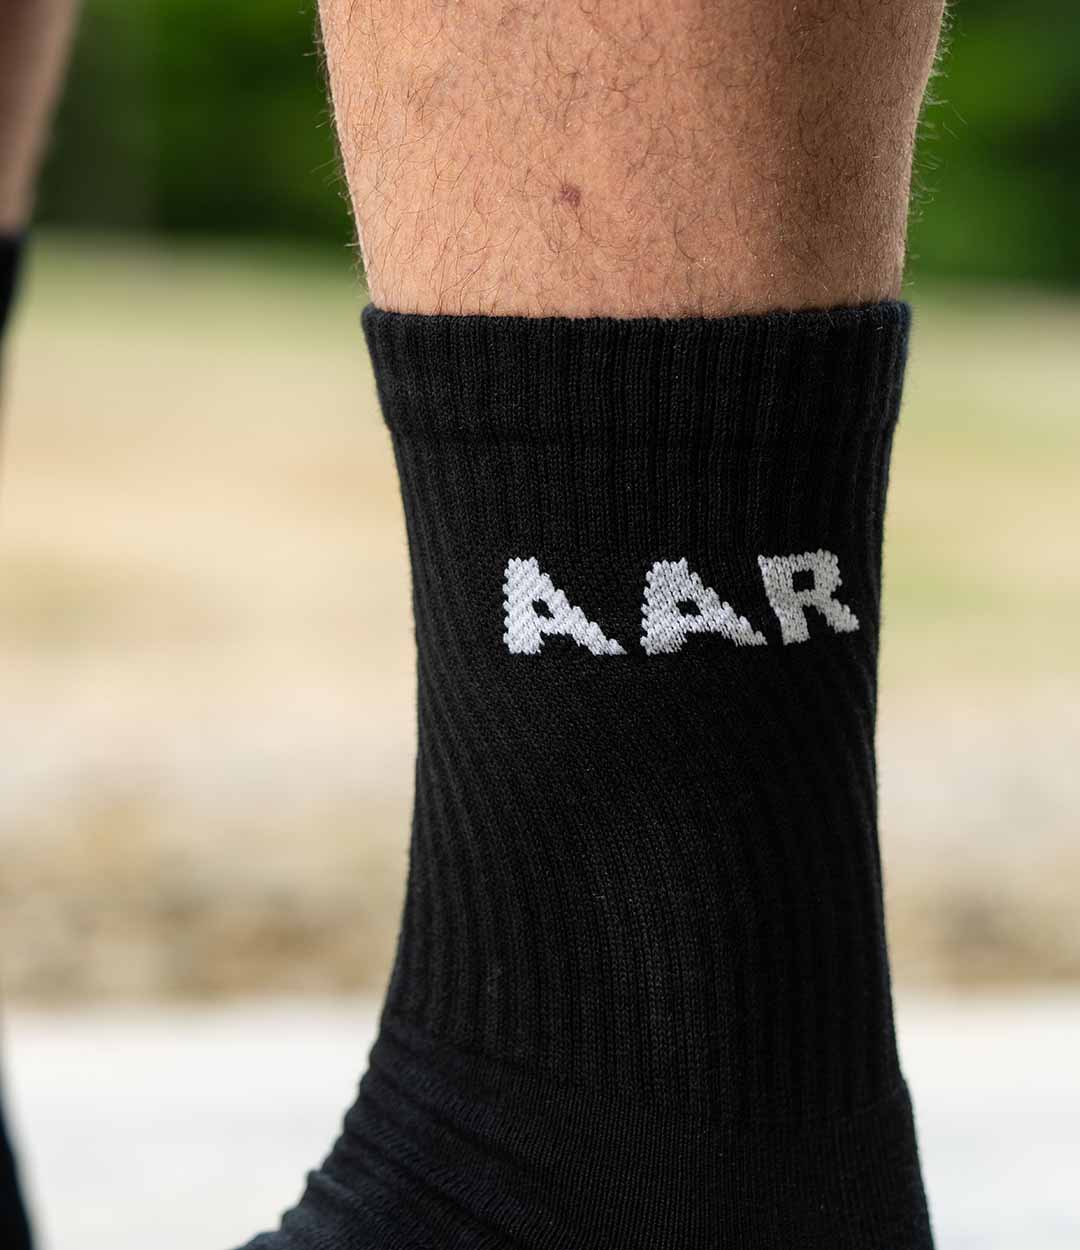 AAr Logo Crew Socks // Black